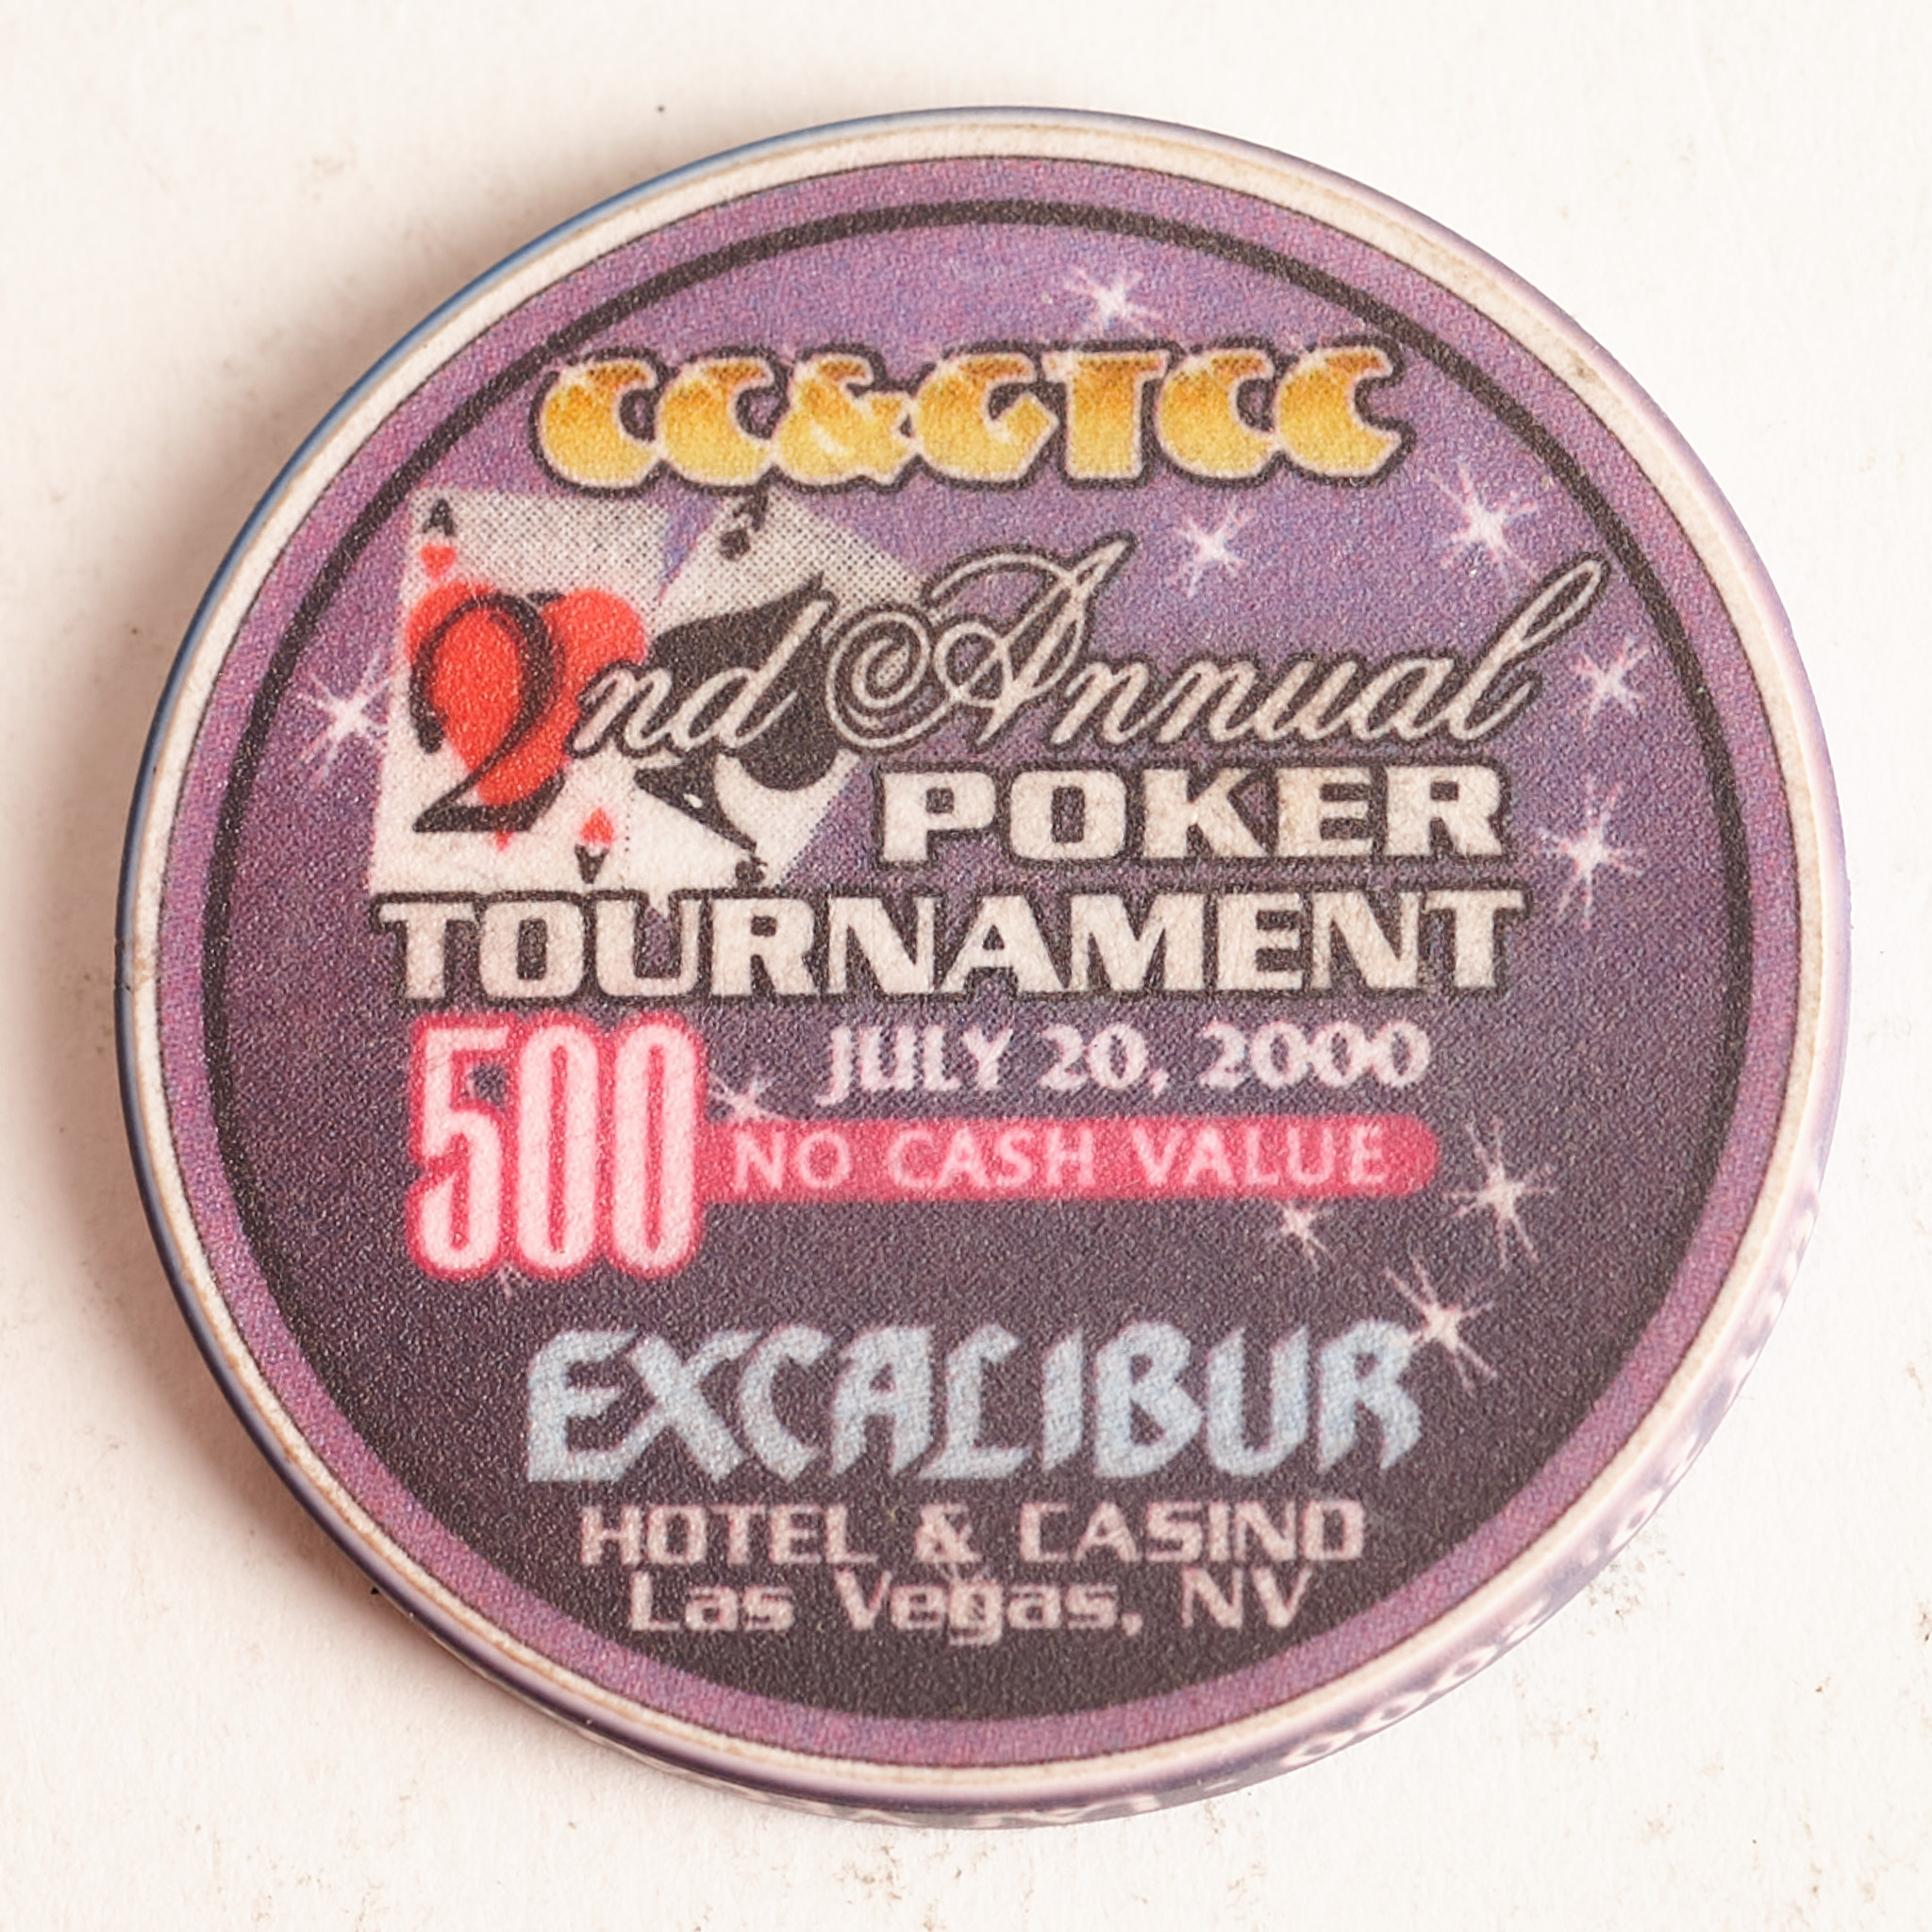 CC&GTCC 2nd ANNUAL POKER TOURNAMENT, 2000, Poker Card Guard Chip